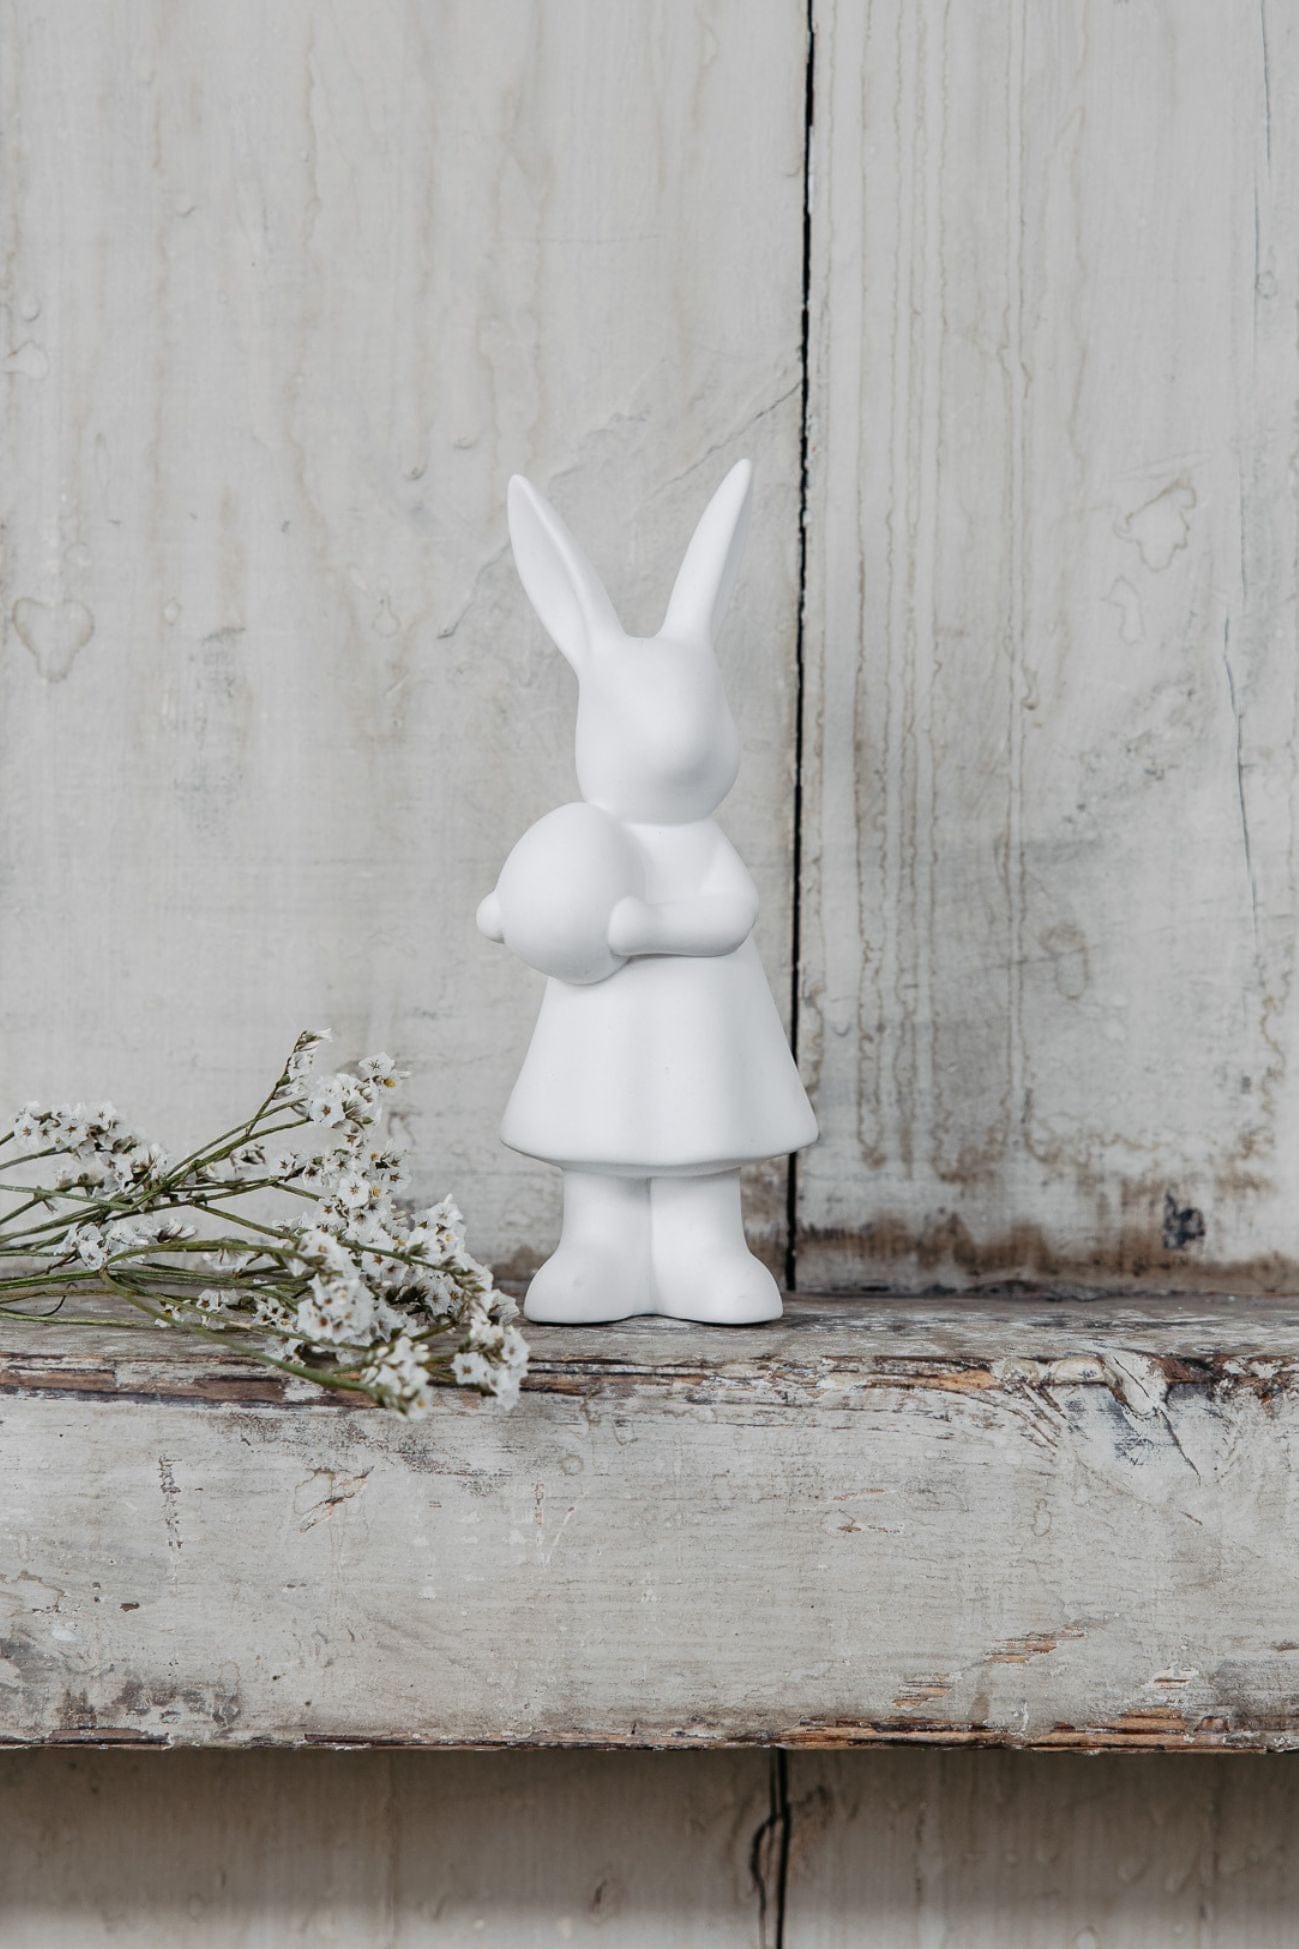 Storefactory Scandinavia Alice Alice - Coniglietto decorativo pasquale in ceramica bianca | Storefactory Scandinavia